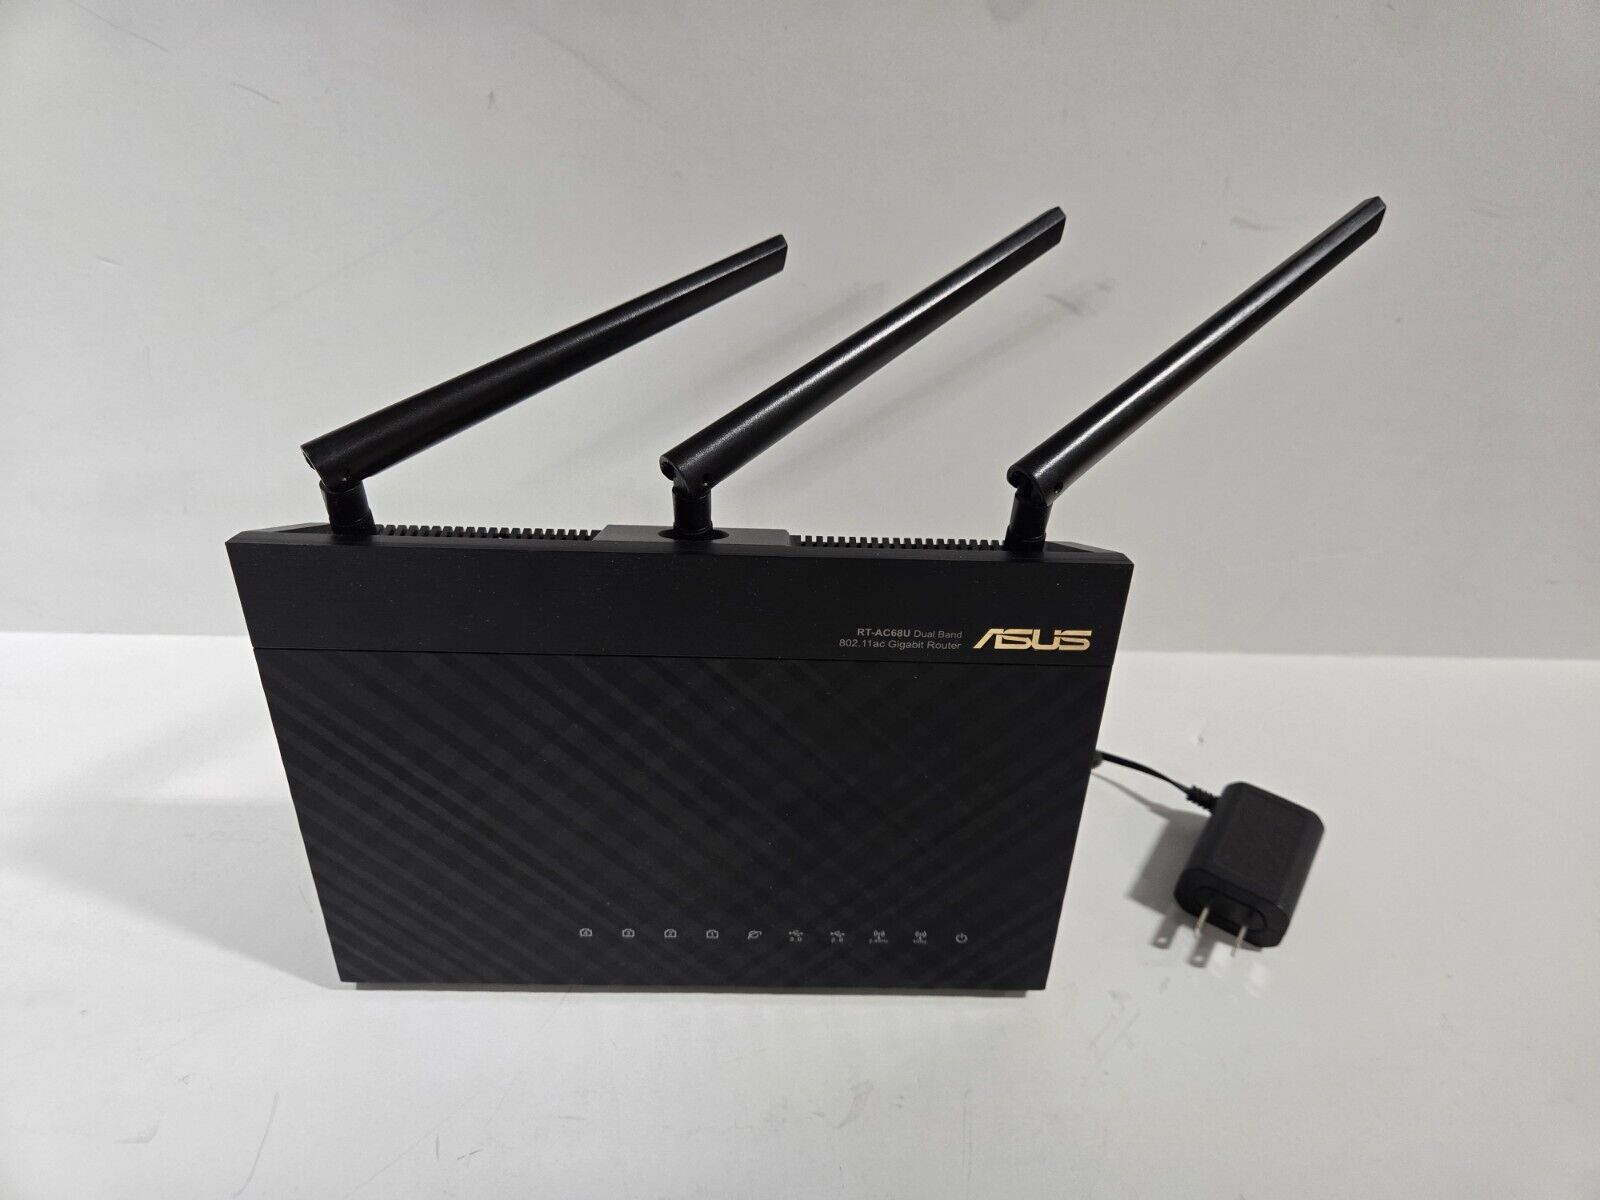 ASUS AC1900 WiFi Gaming Router (RT-AC68U) - Dual Band Gigabit Wireless Internet